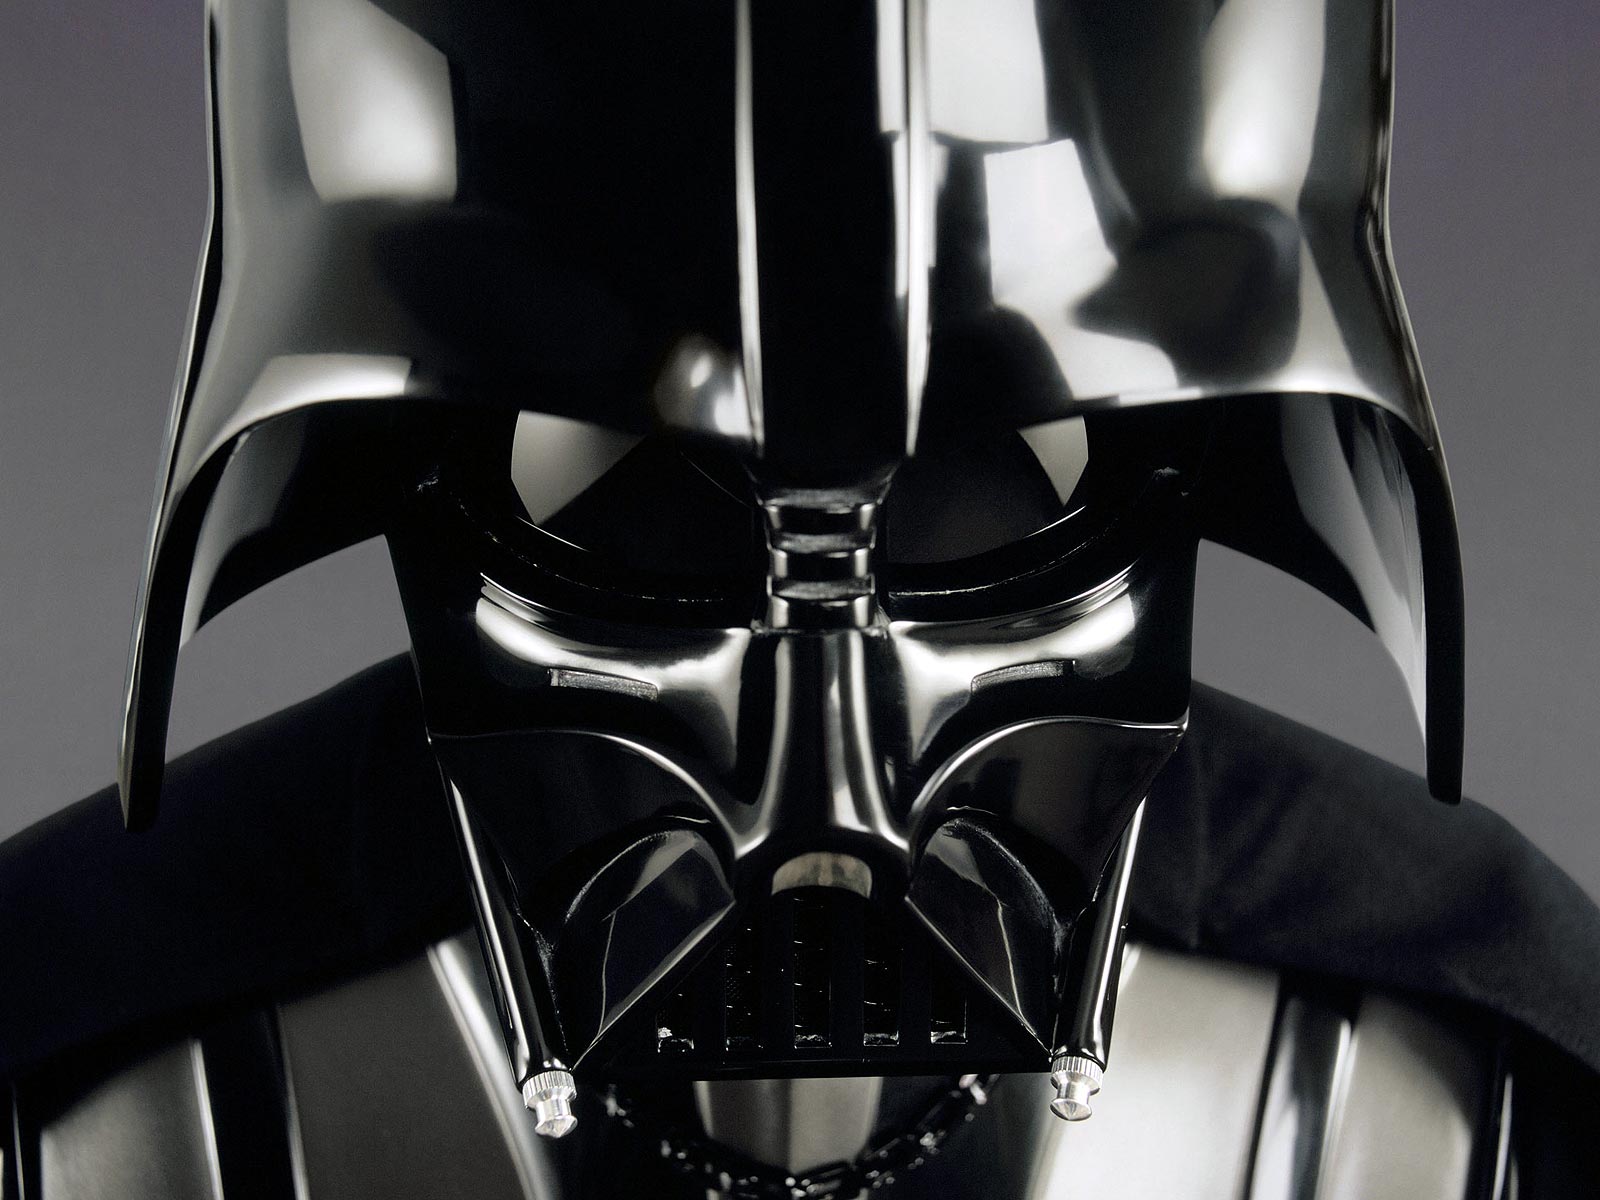 Darth Vader, the Sith Lord from Star Wars HD desktop wallpaper.